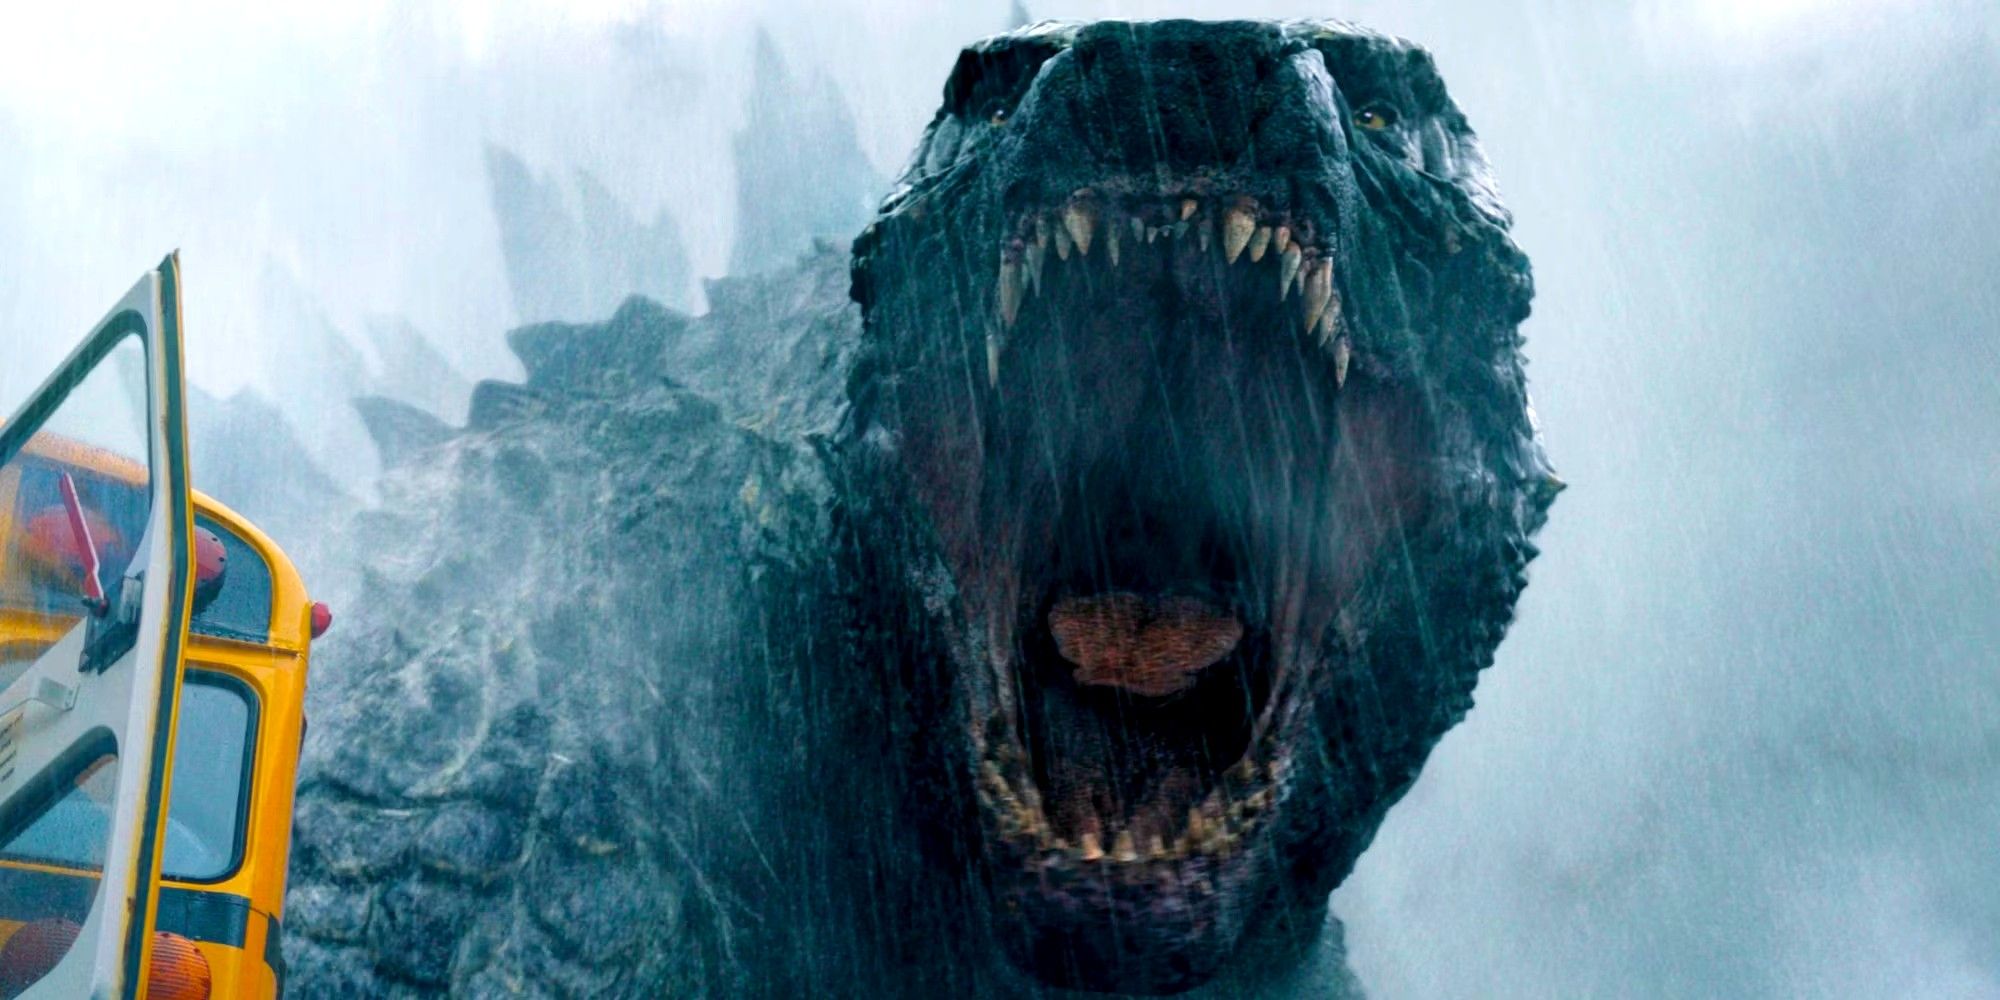 Godzilla roaring in Monarch Legacy of Monsters